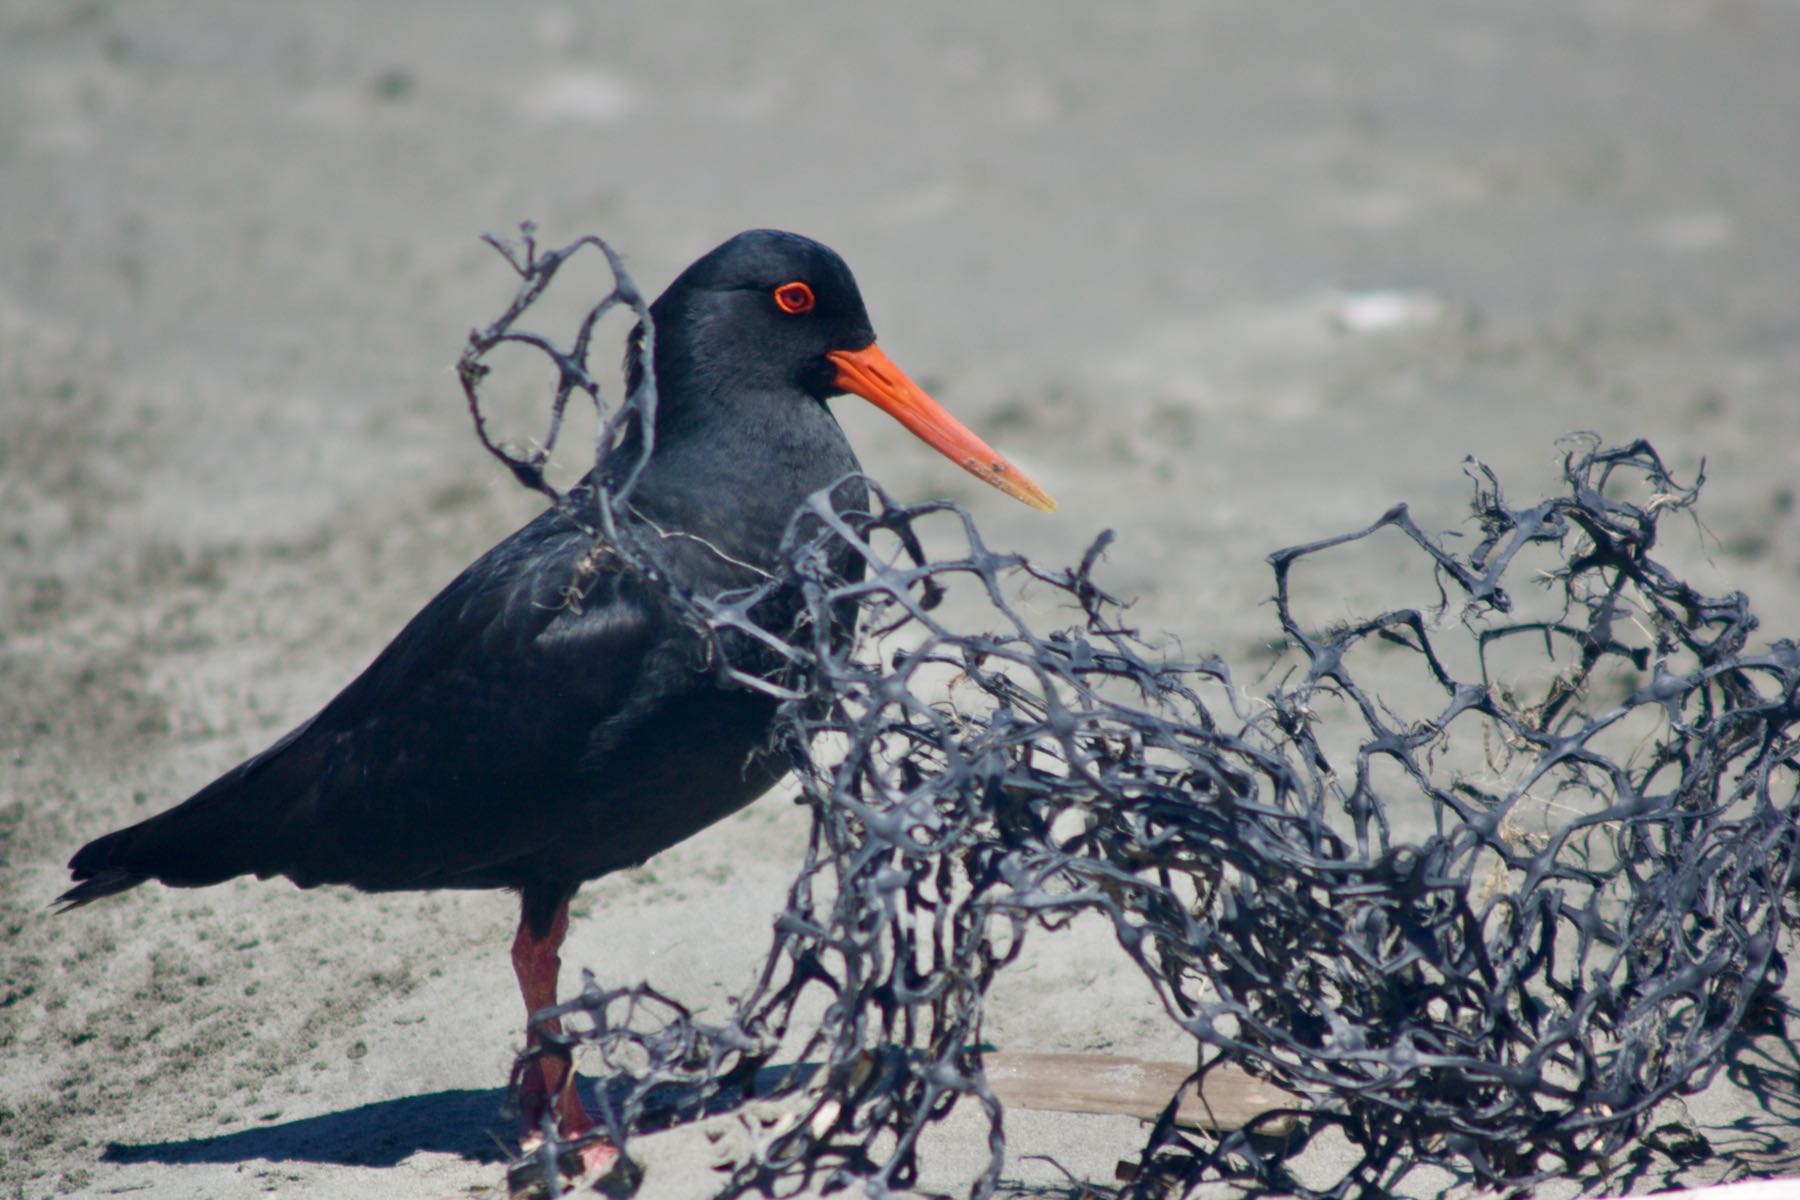 A chunky black bird with a bright orange bill. 